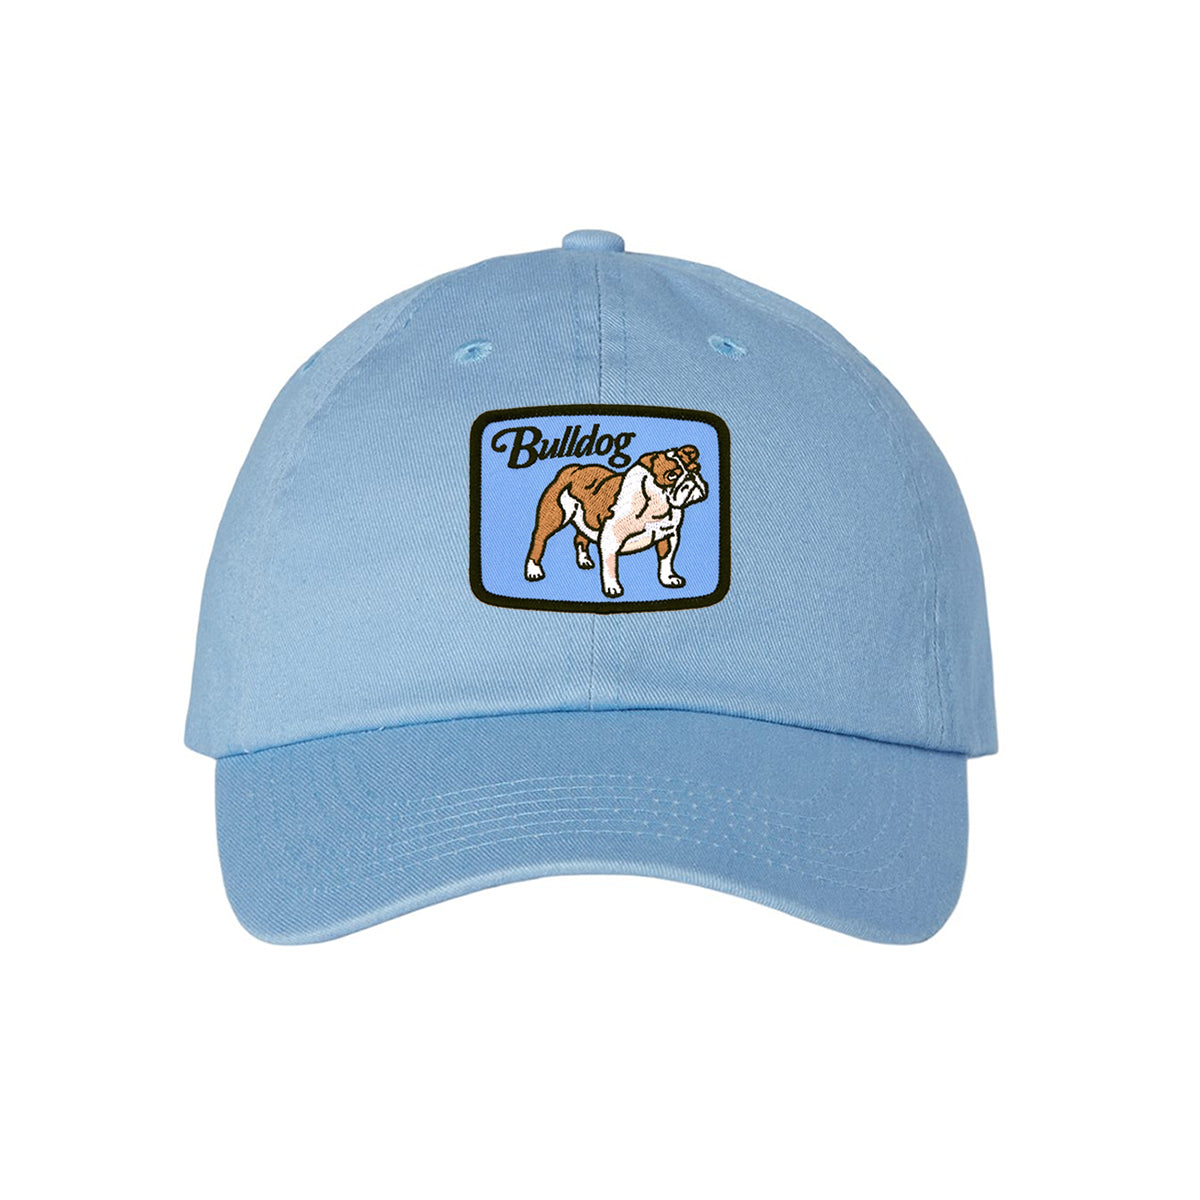 Bulldog Patch Hat (Light Blue)